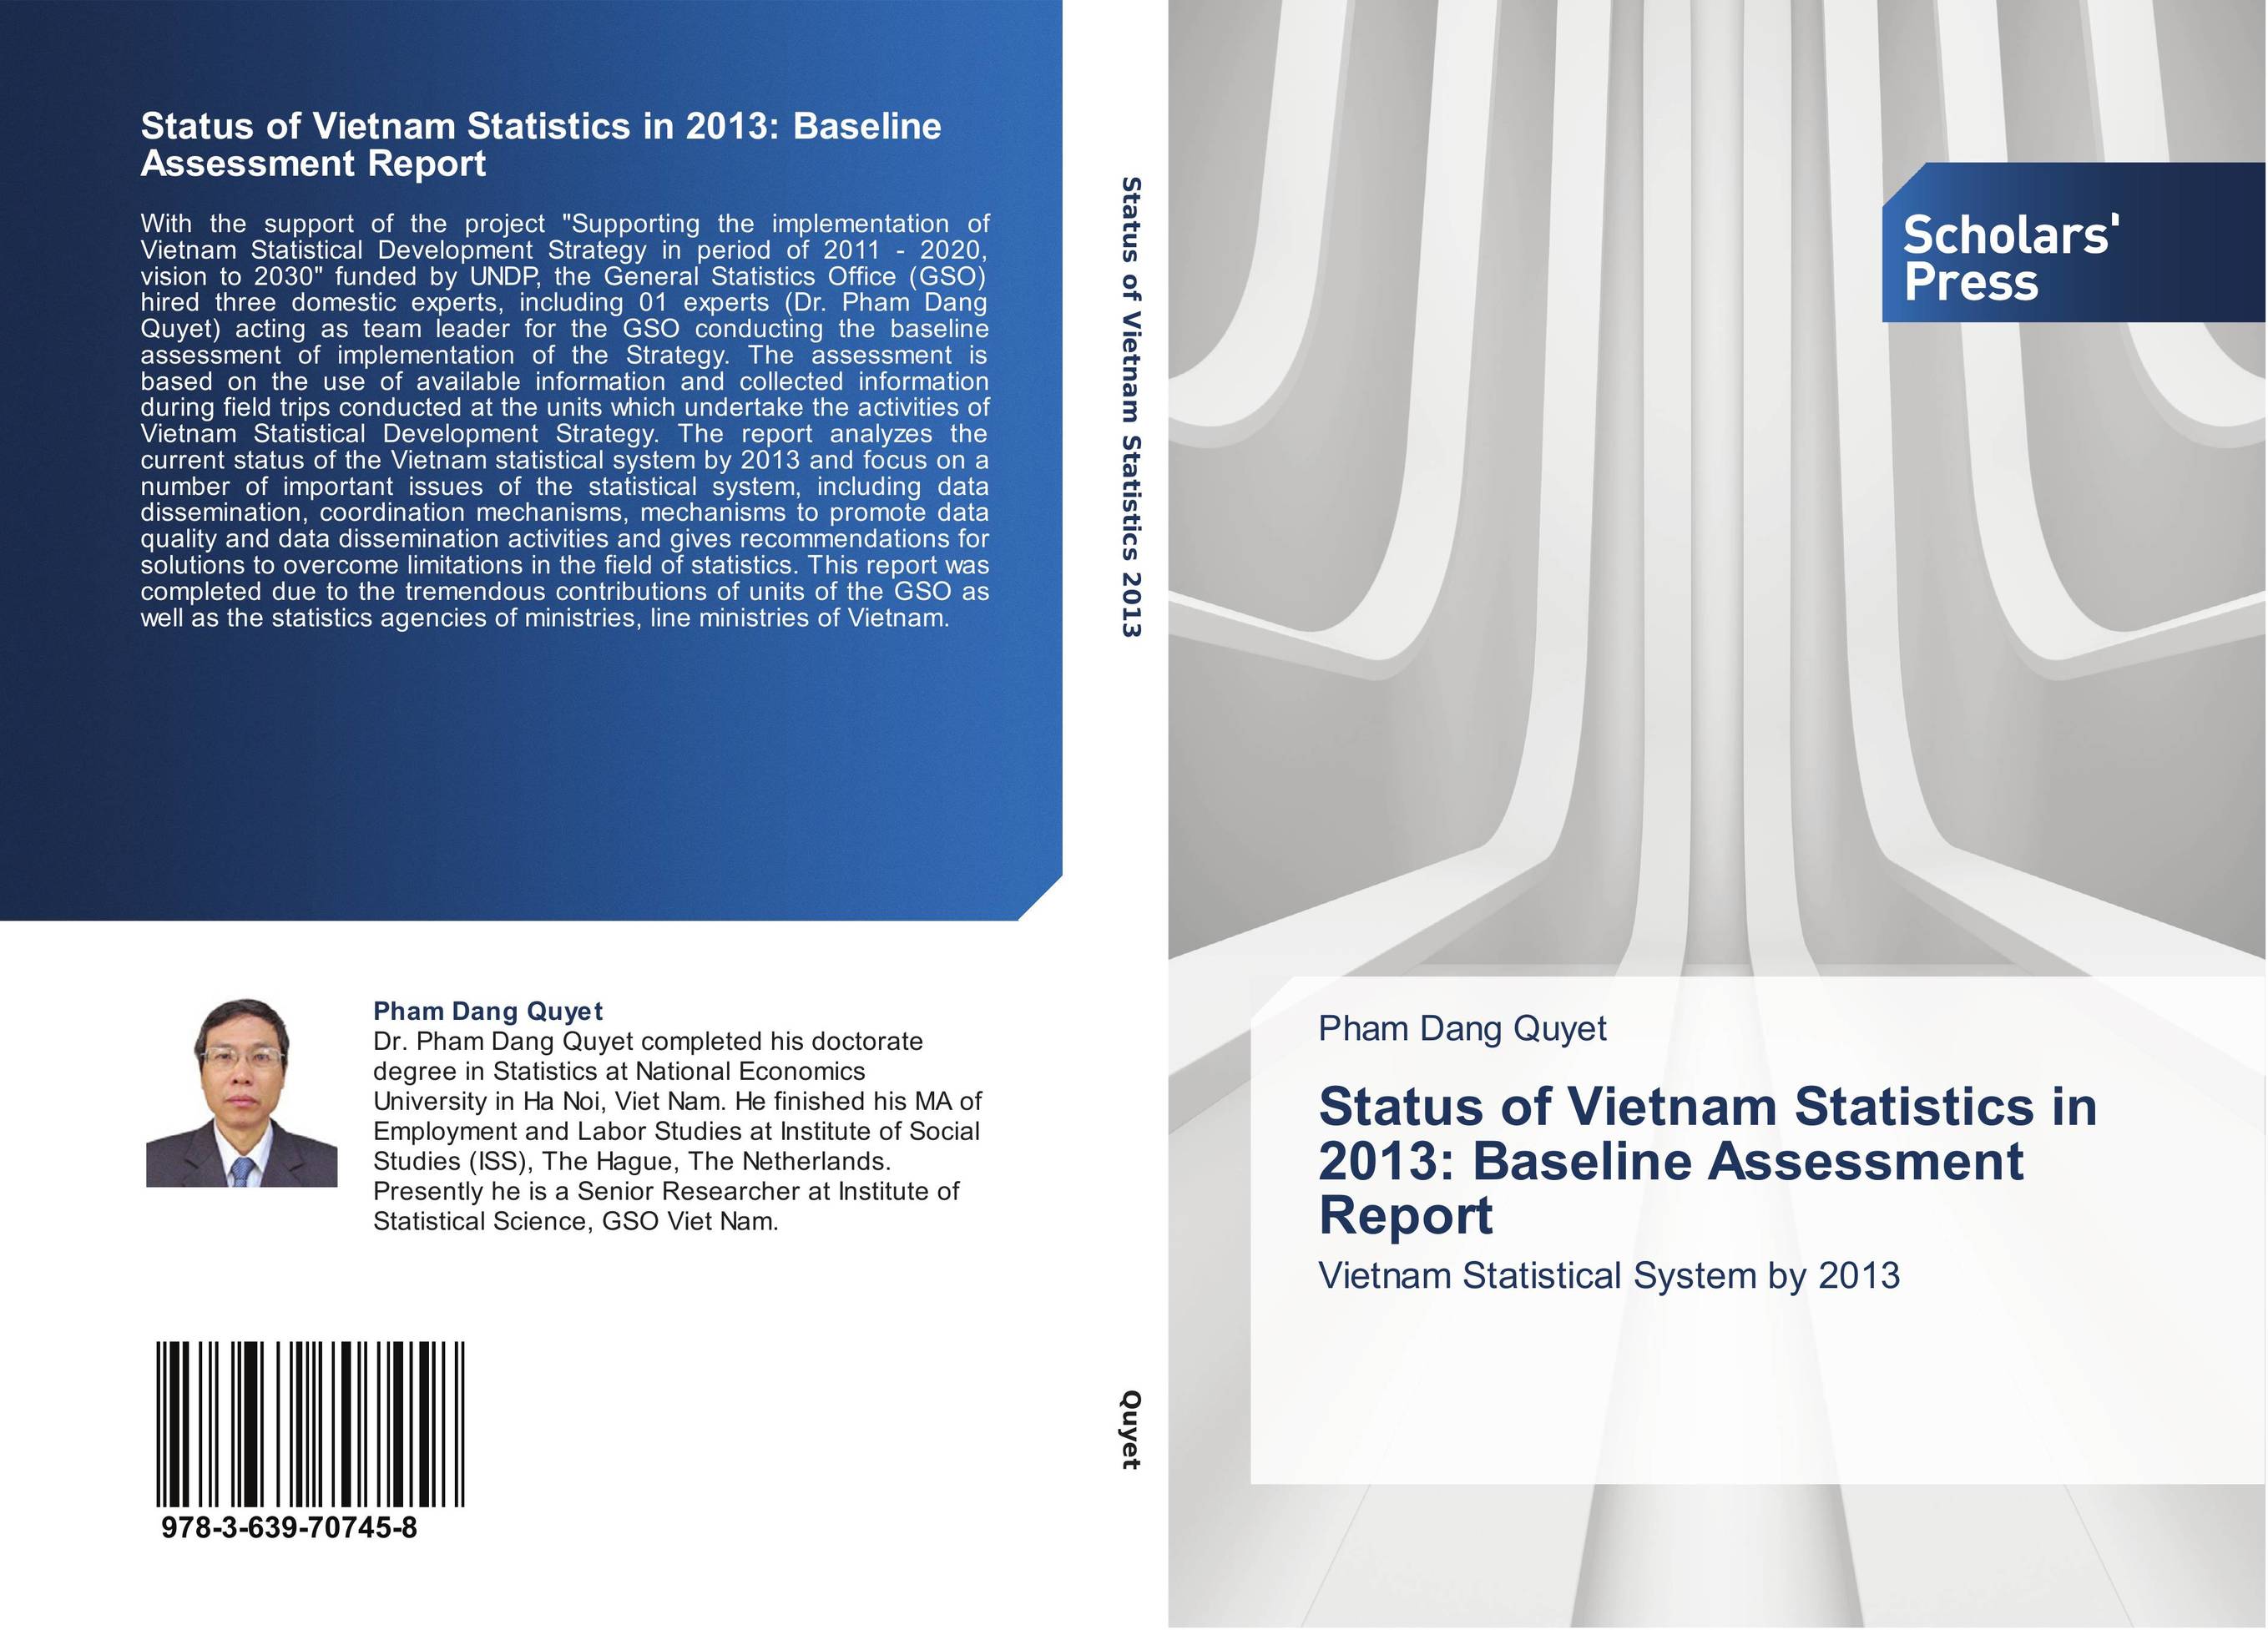 Vietnam statistics data. Assessment report